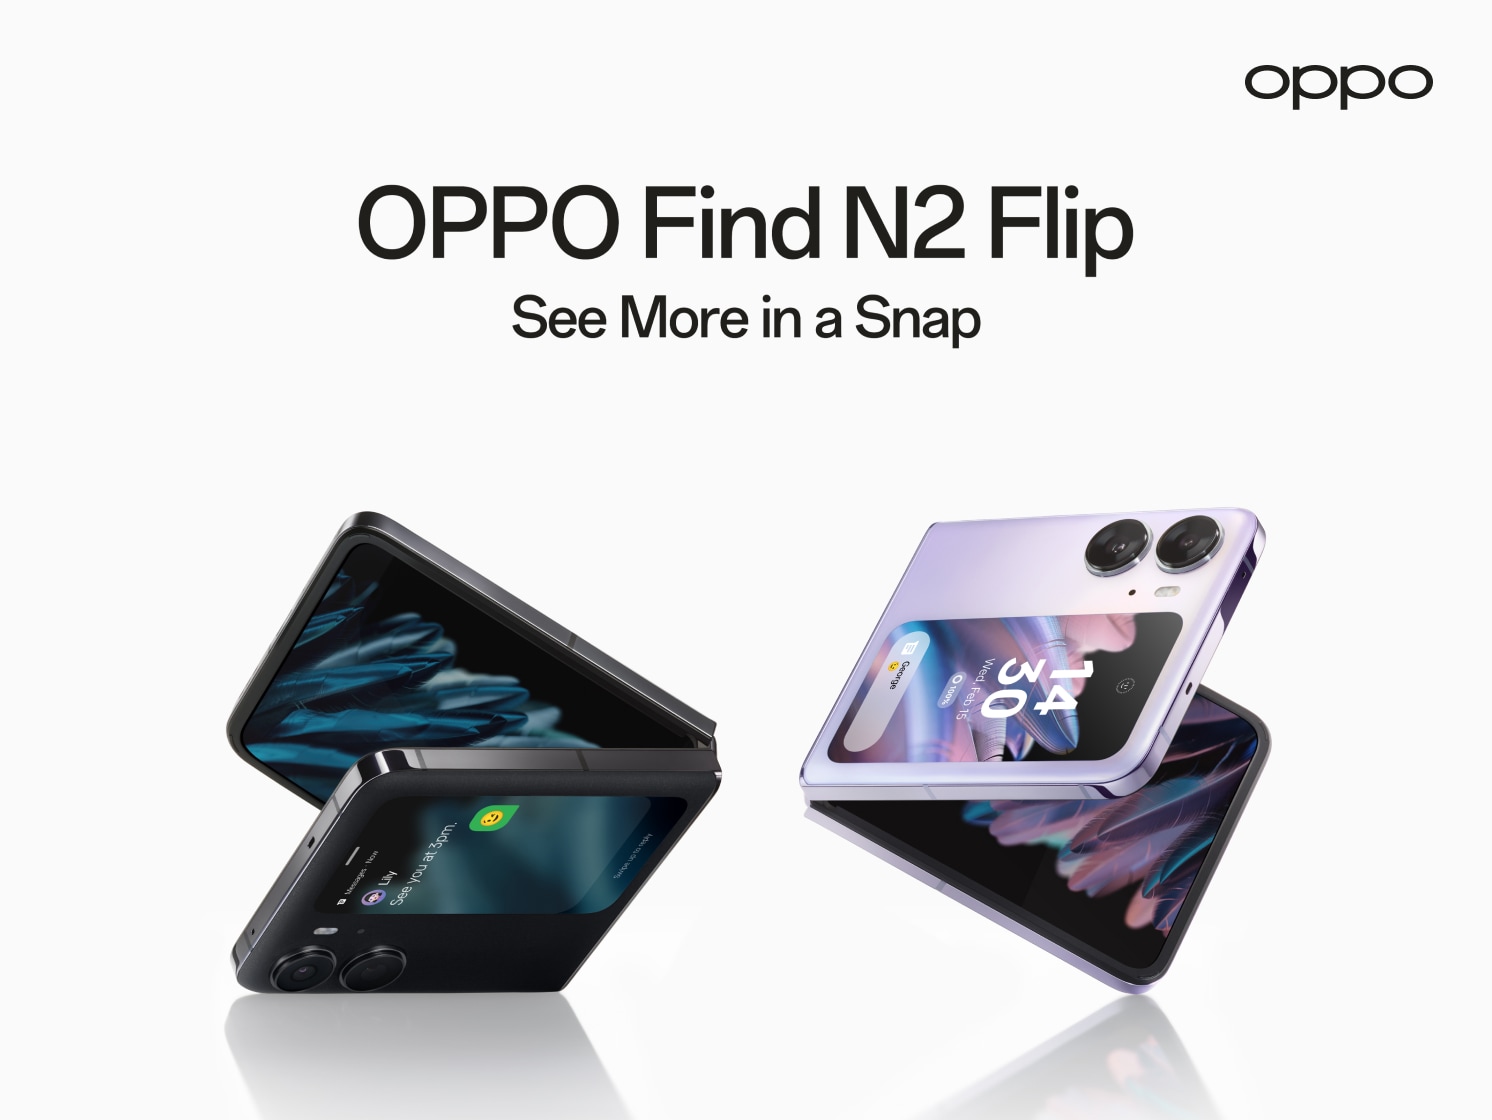 OPPO Find X7 Ultra 5G Phone Main Camera 1-inch Sensor - Vodabuy